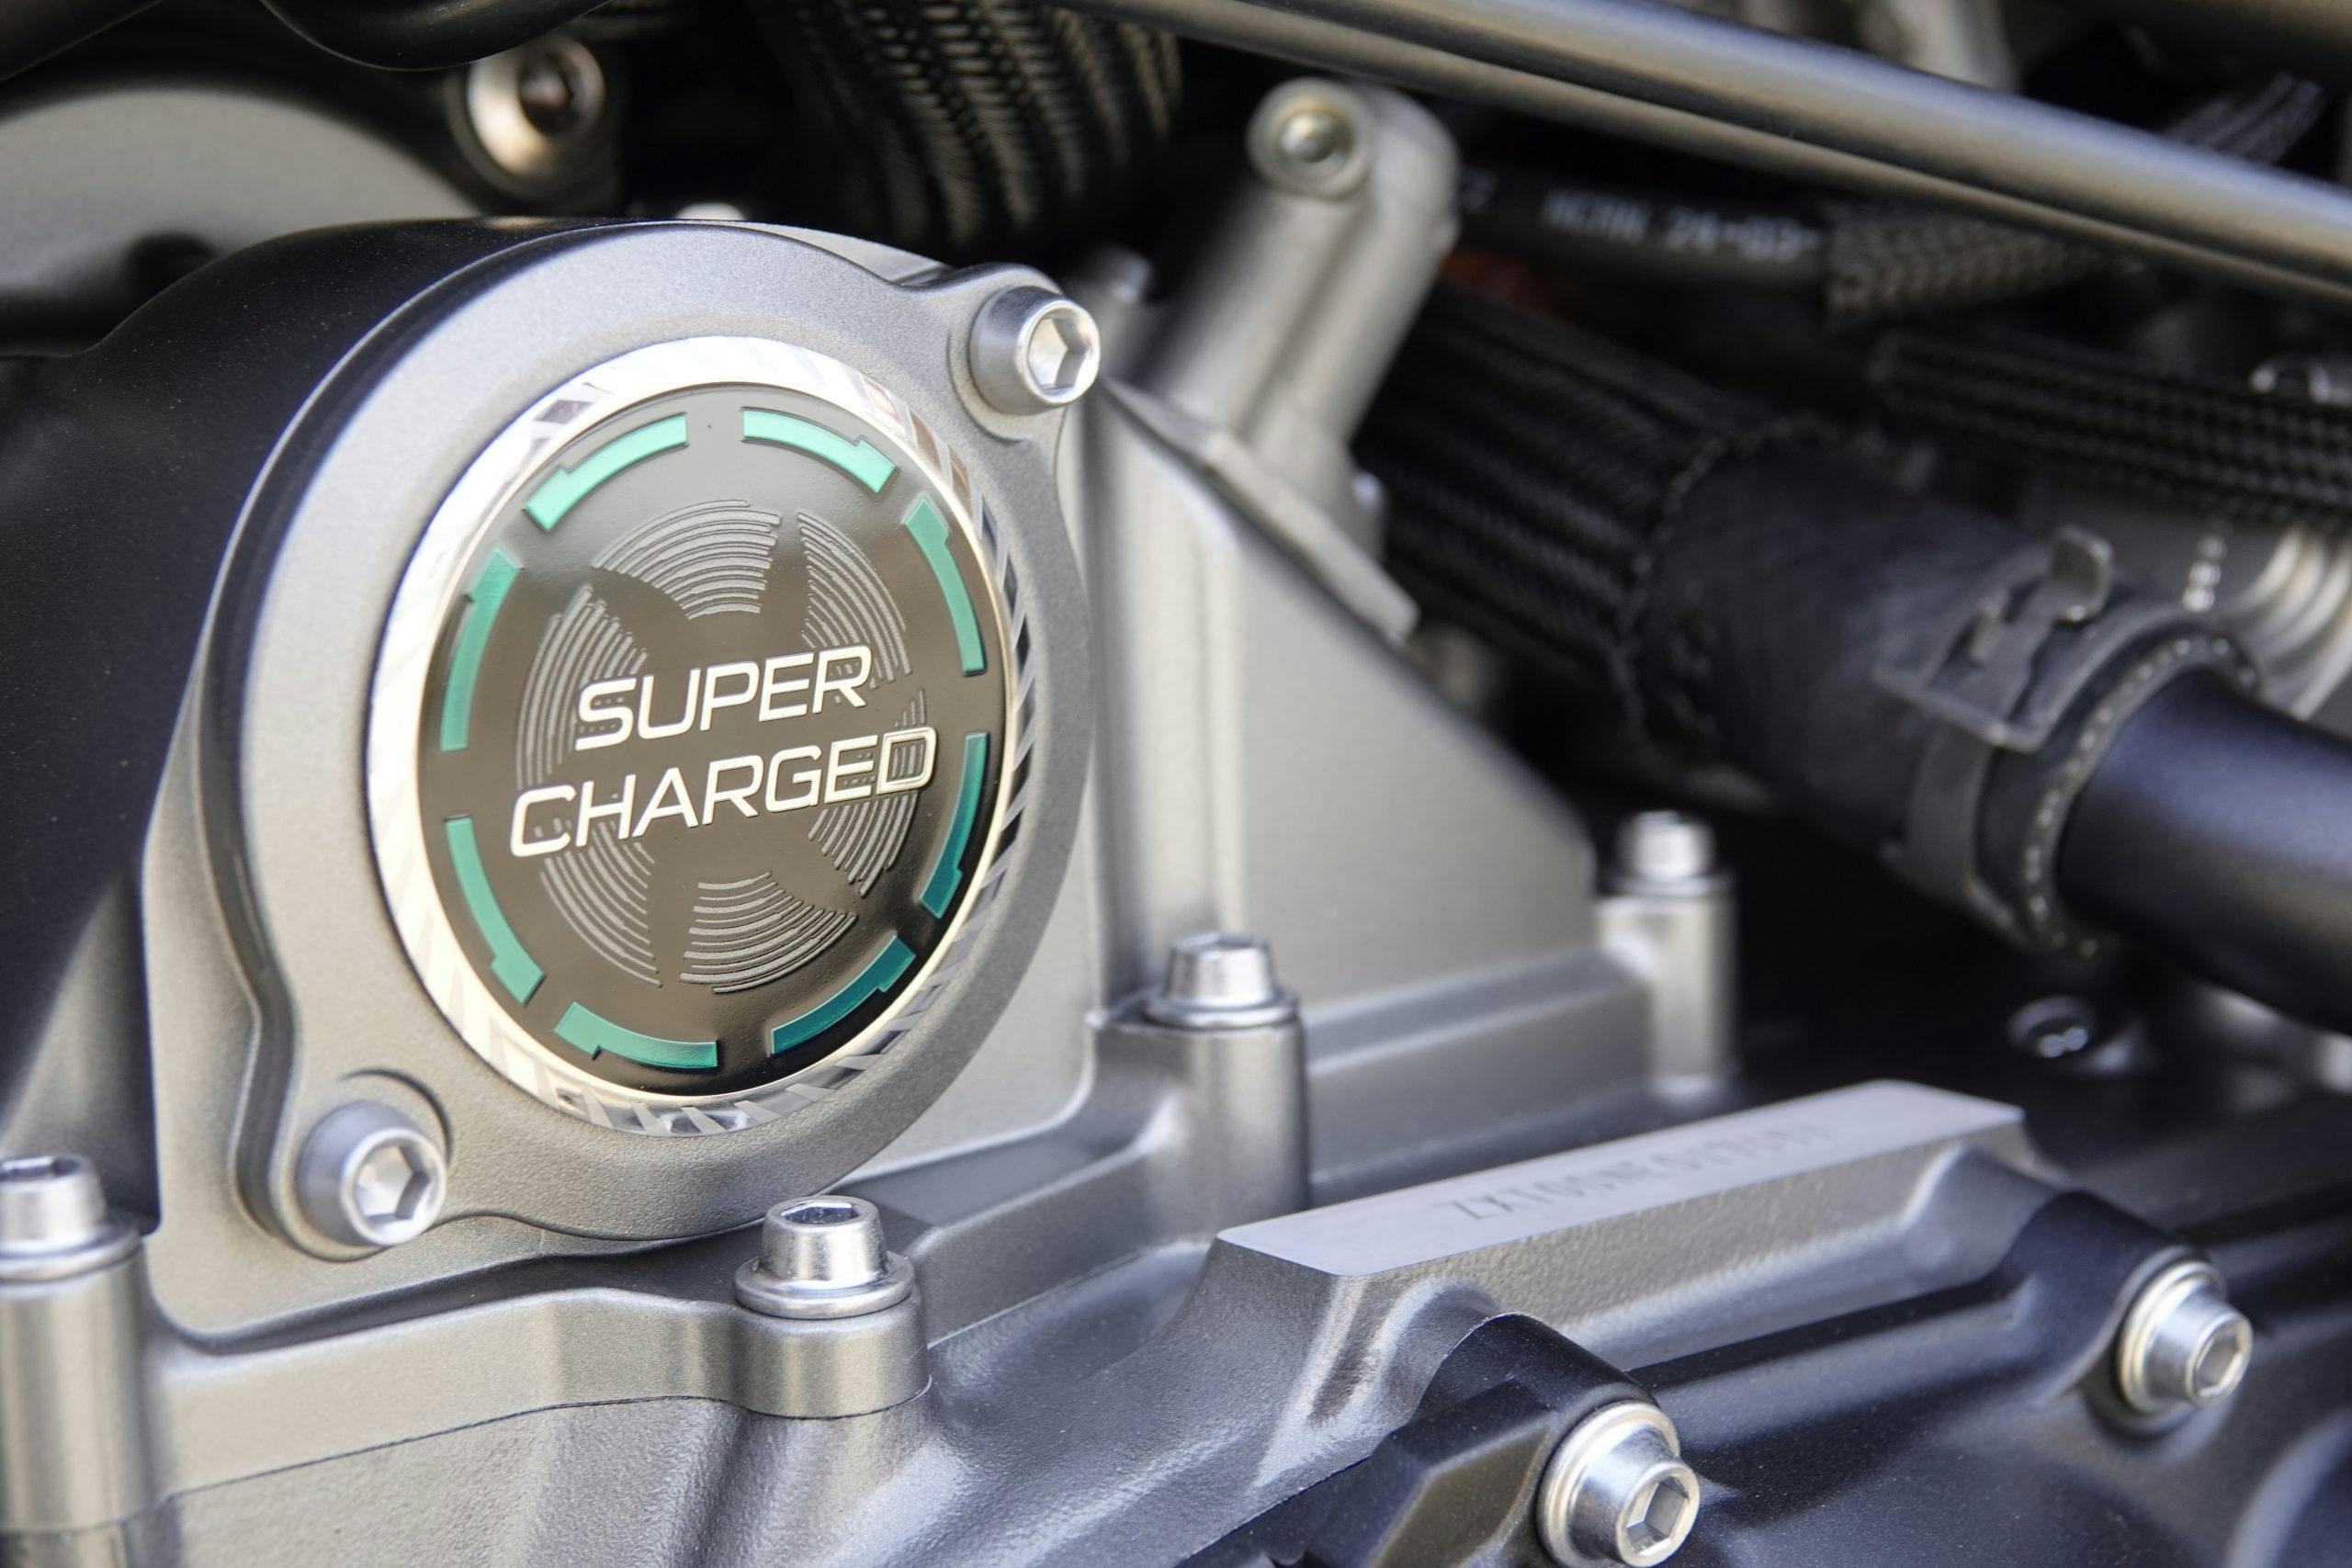 2021 Kawasaki H2 SX-SE super charged detail